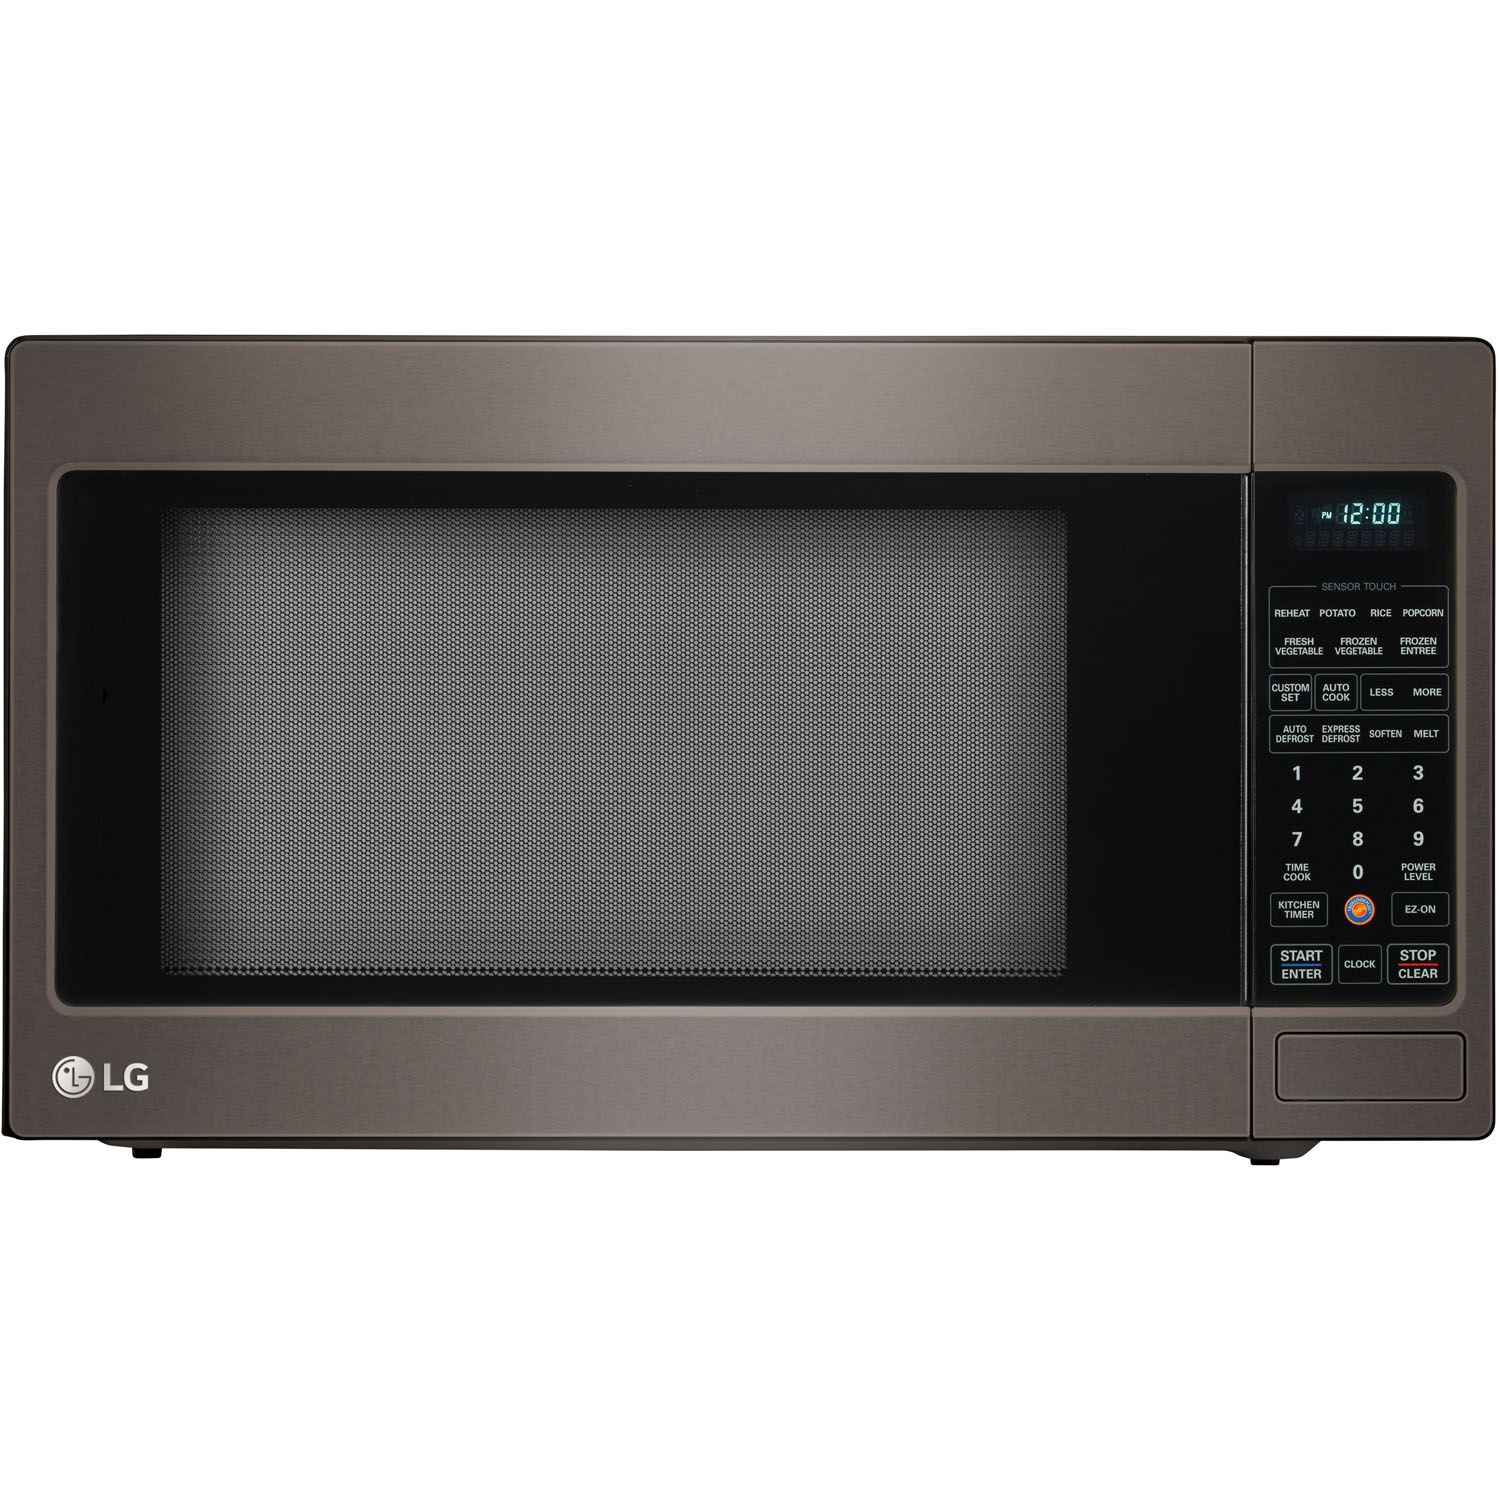 24 Countertop Microwave Oven - 1200 Watt Stainless Steel